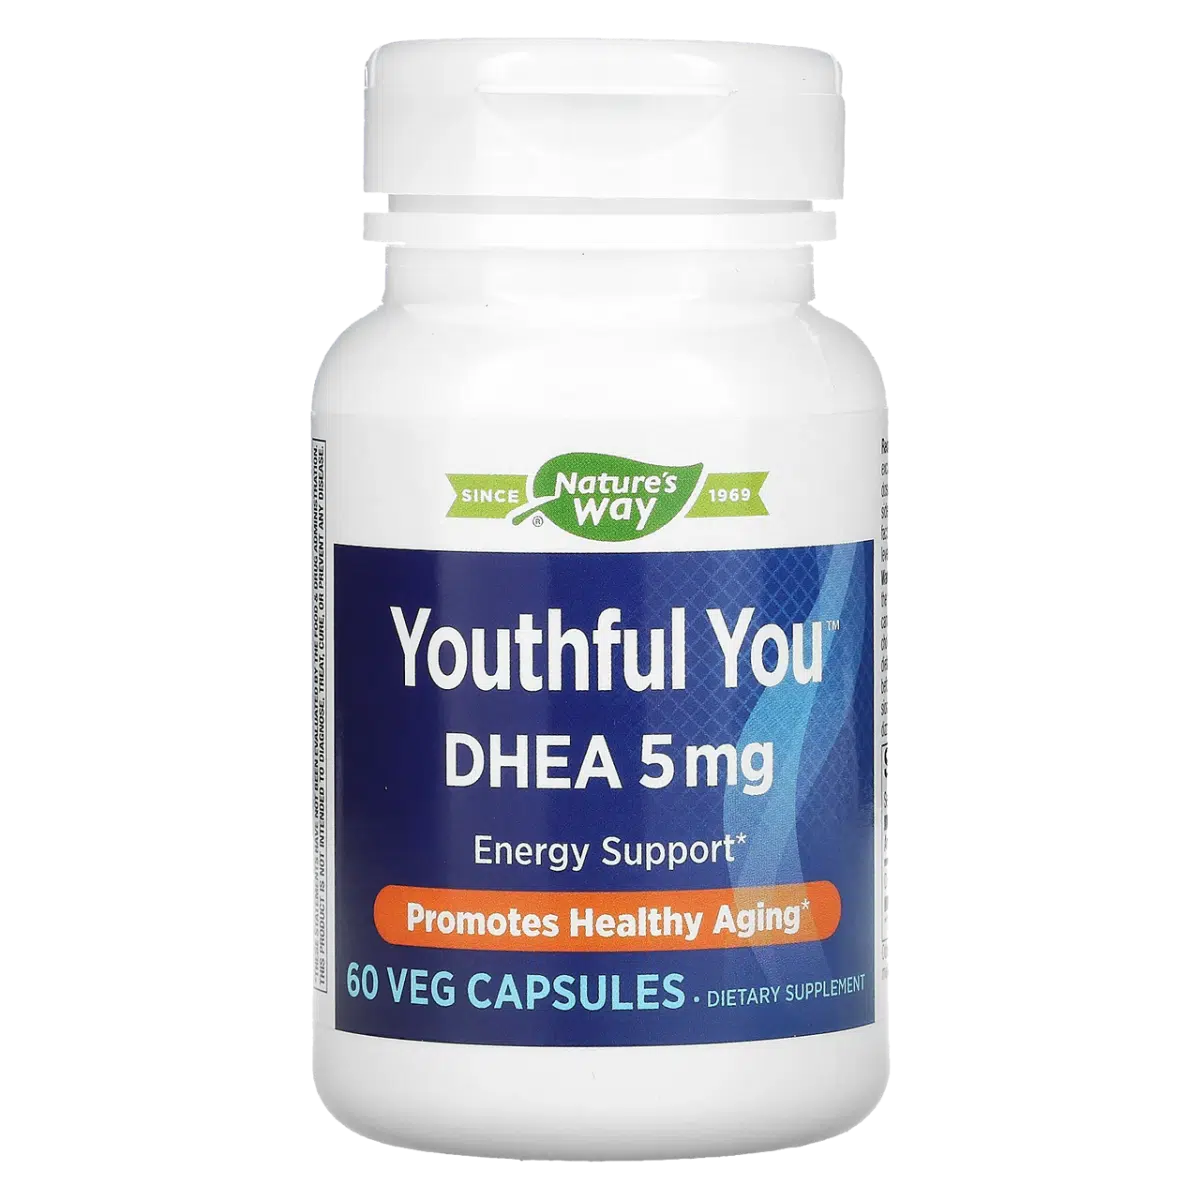 Youthful You DHEA 5mg